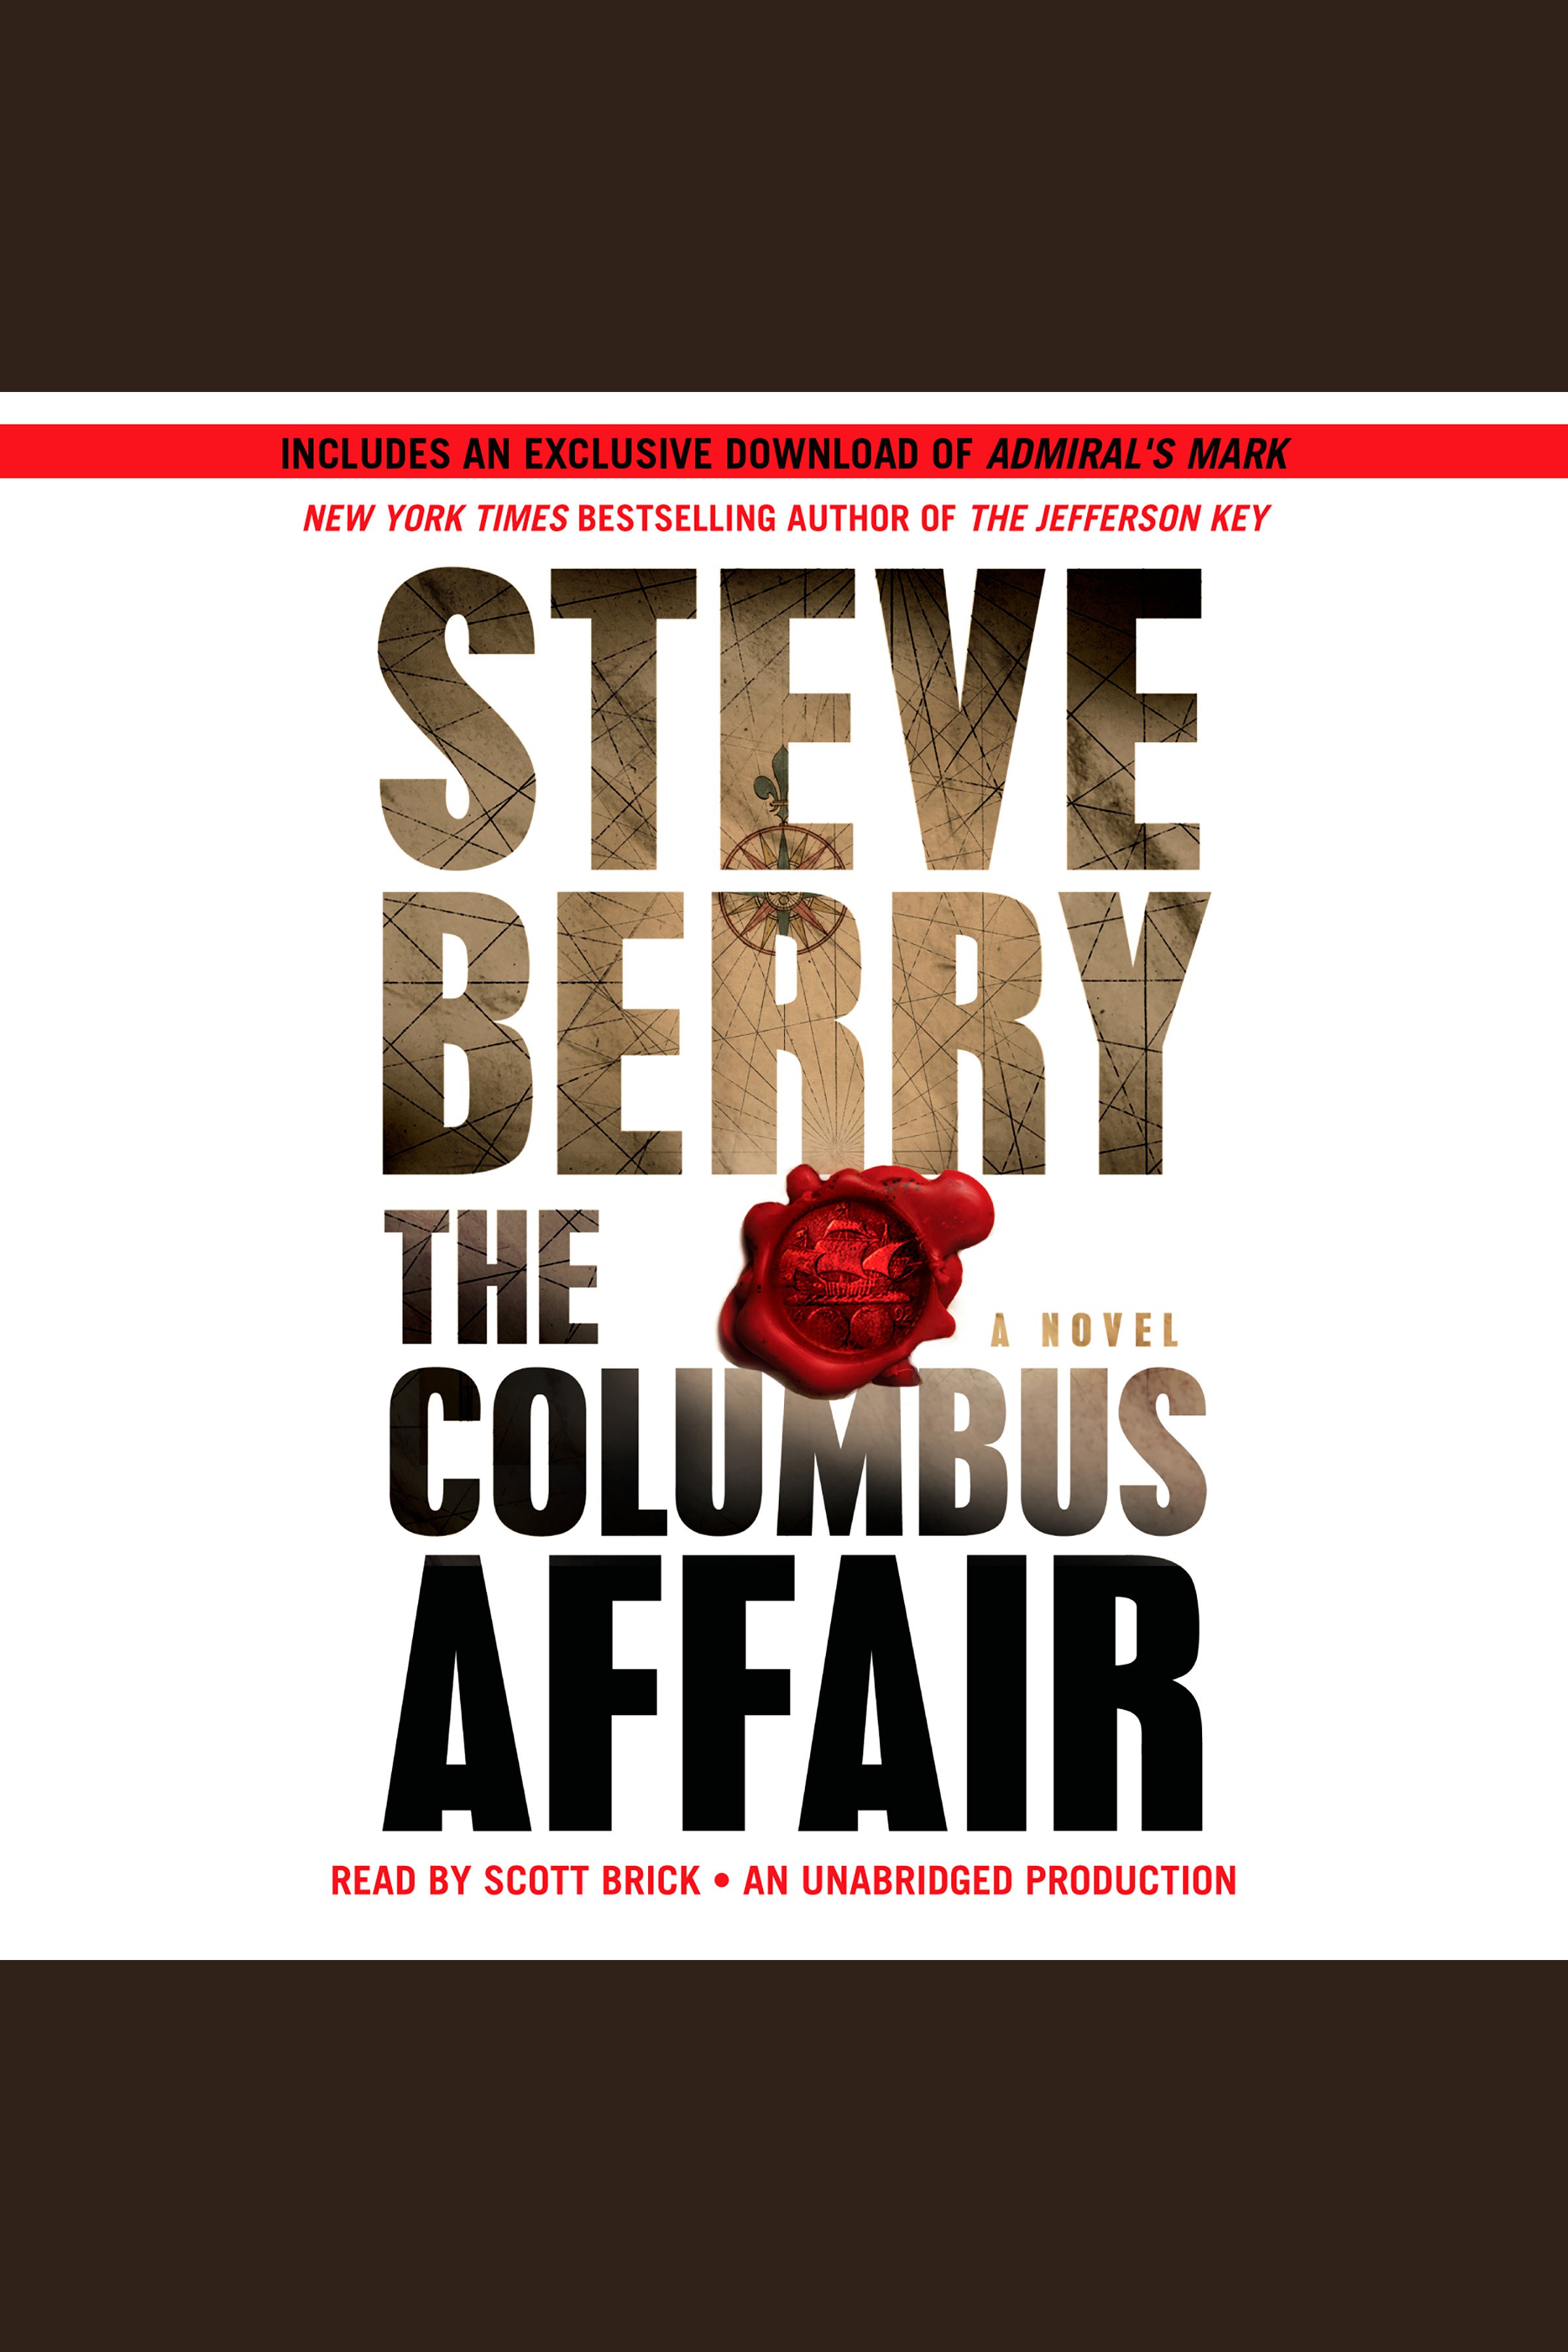 The Columbus affair cover image